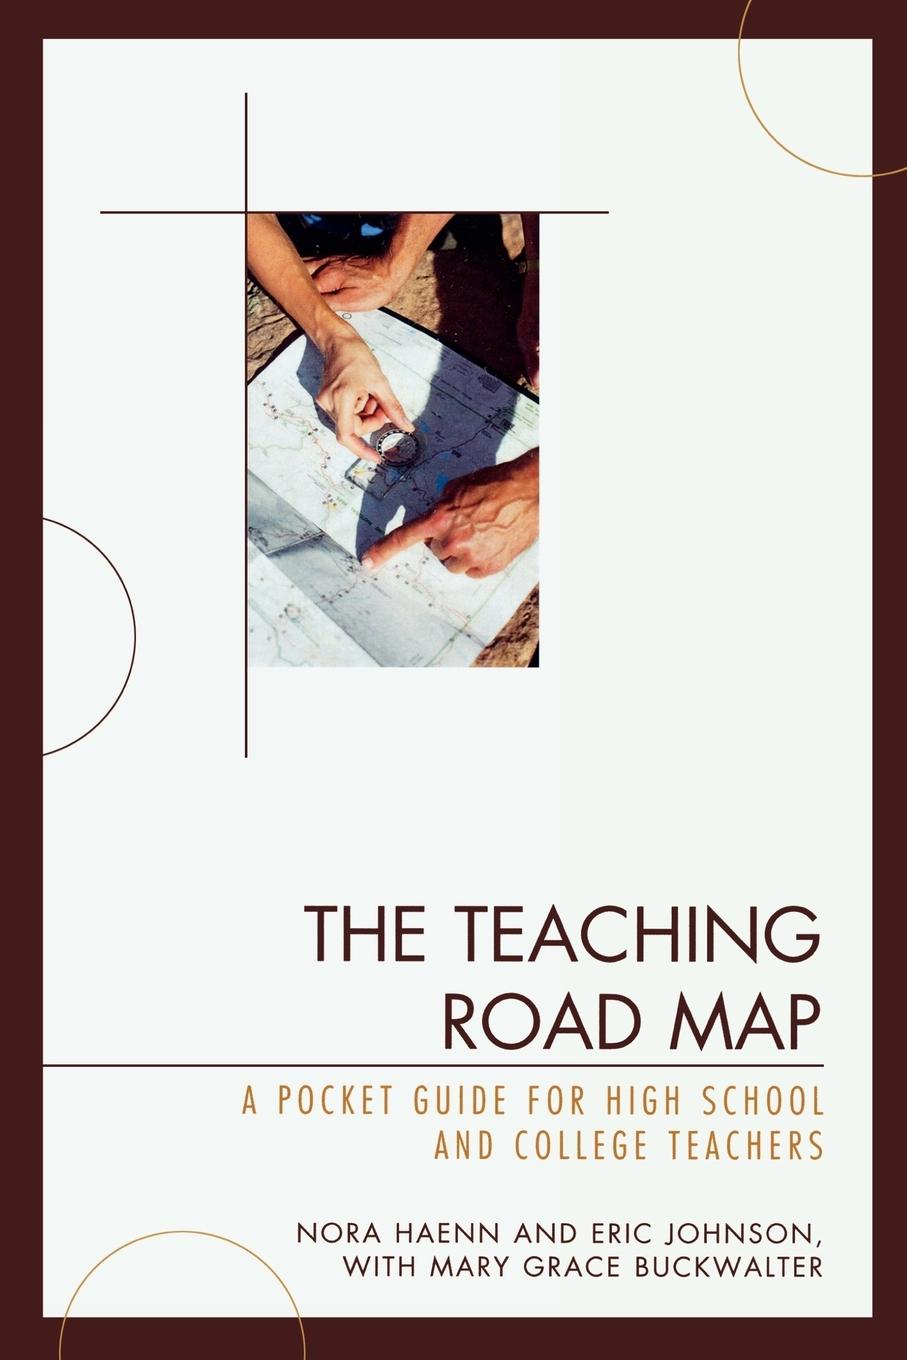 The Teaching Road Map - Haenn, Nora Johnson, Eric Buckwalter, Mary Grace